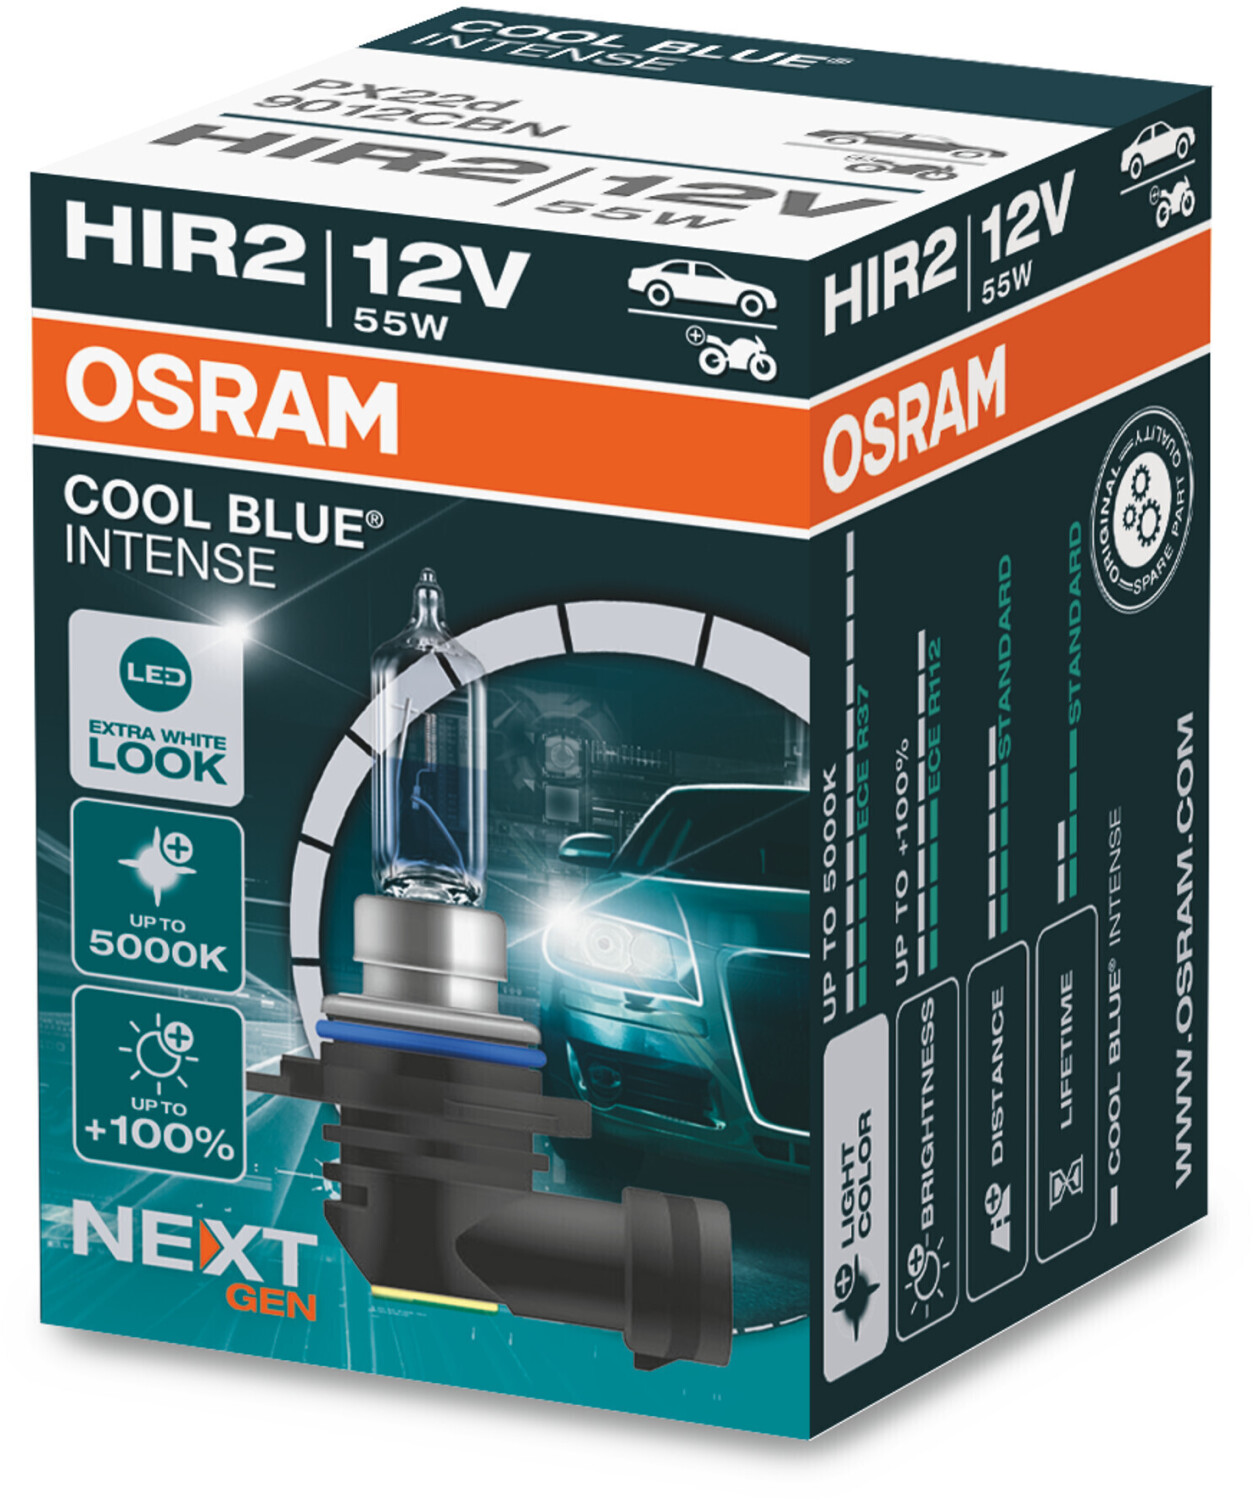 Osram Cool Blue Intense NextGen H4 12V 60/55W (64193CBN-01B) desde